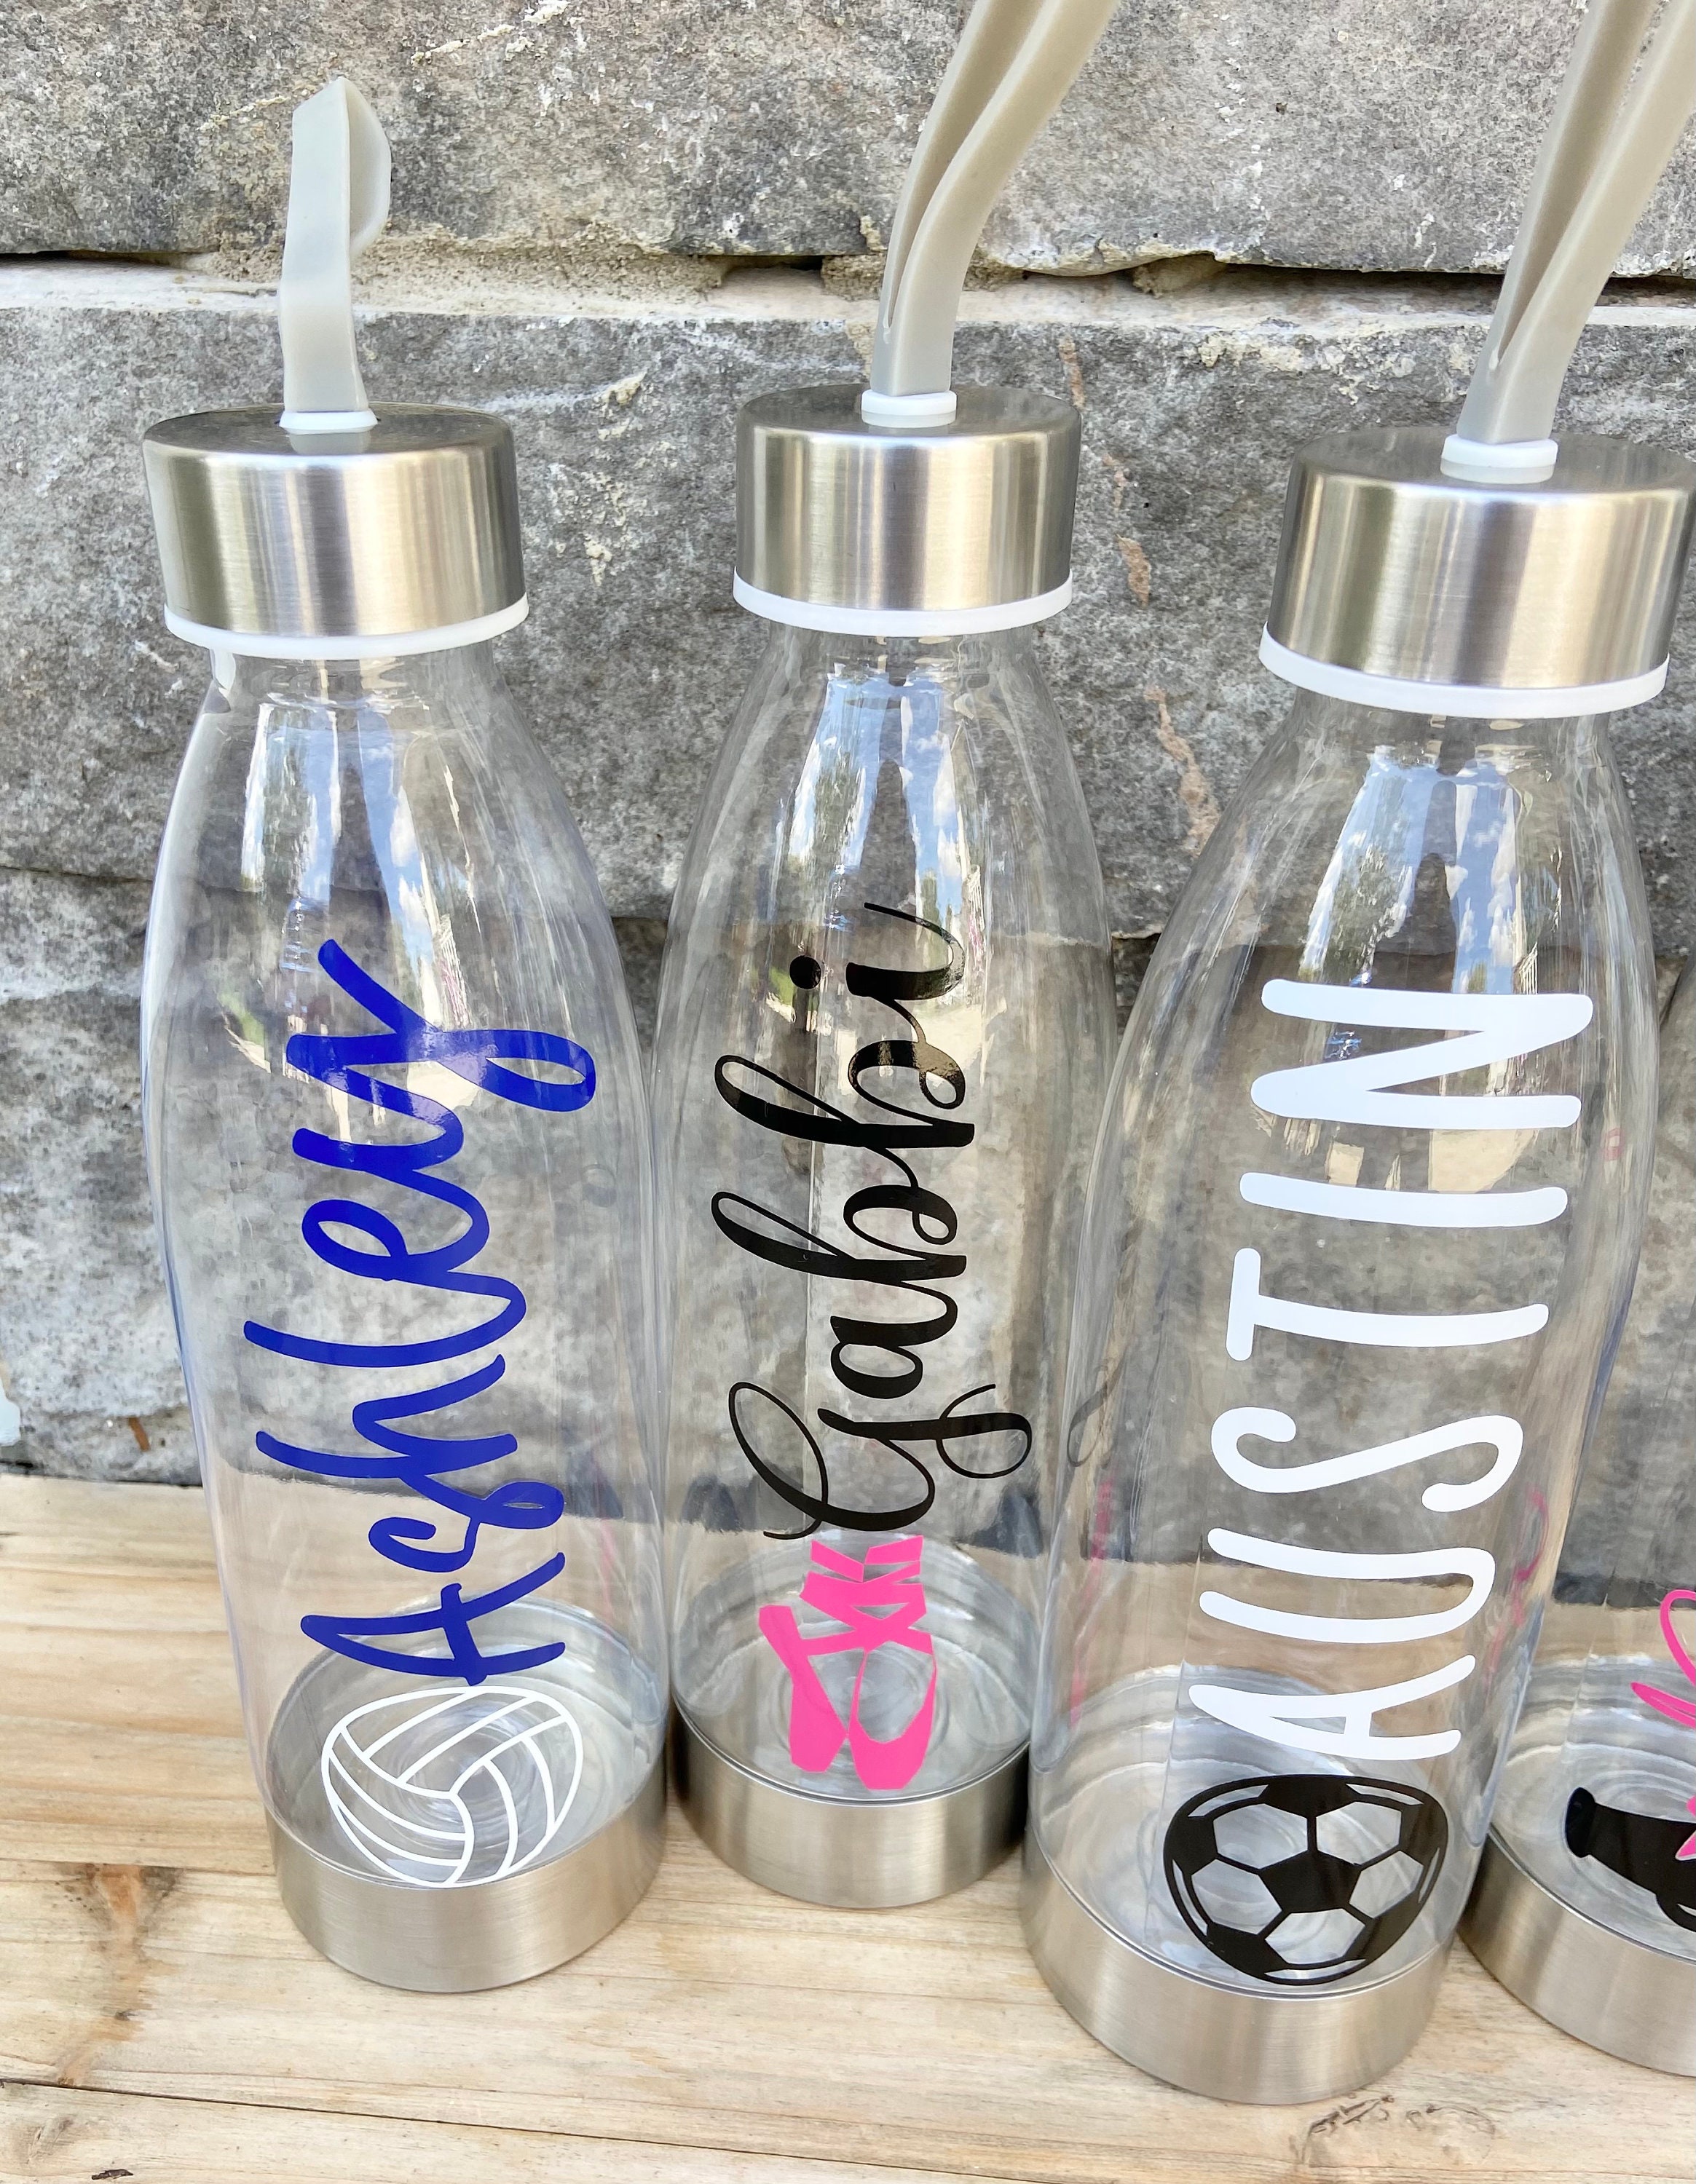 Sports Water Bottle, Basketball, Football, Soccer, Volleyball, Pop